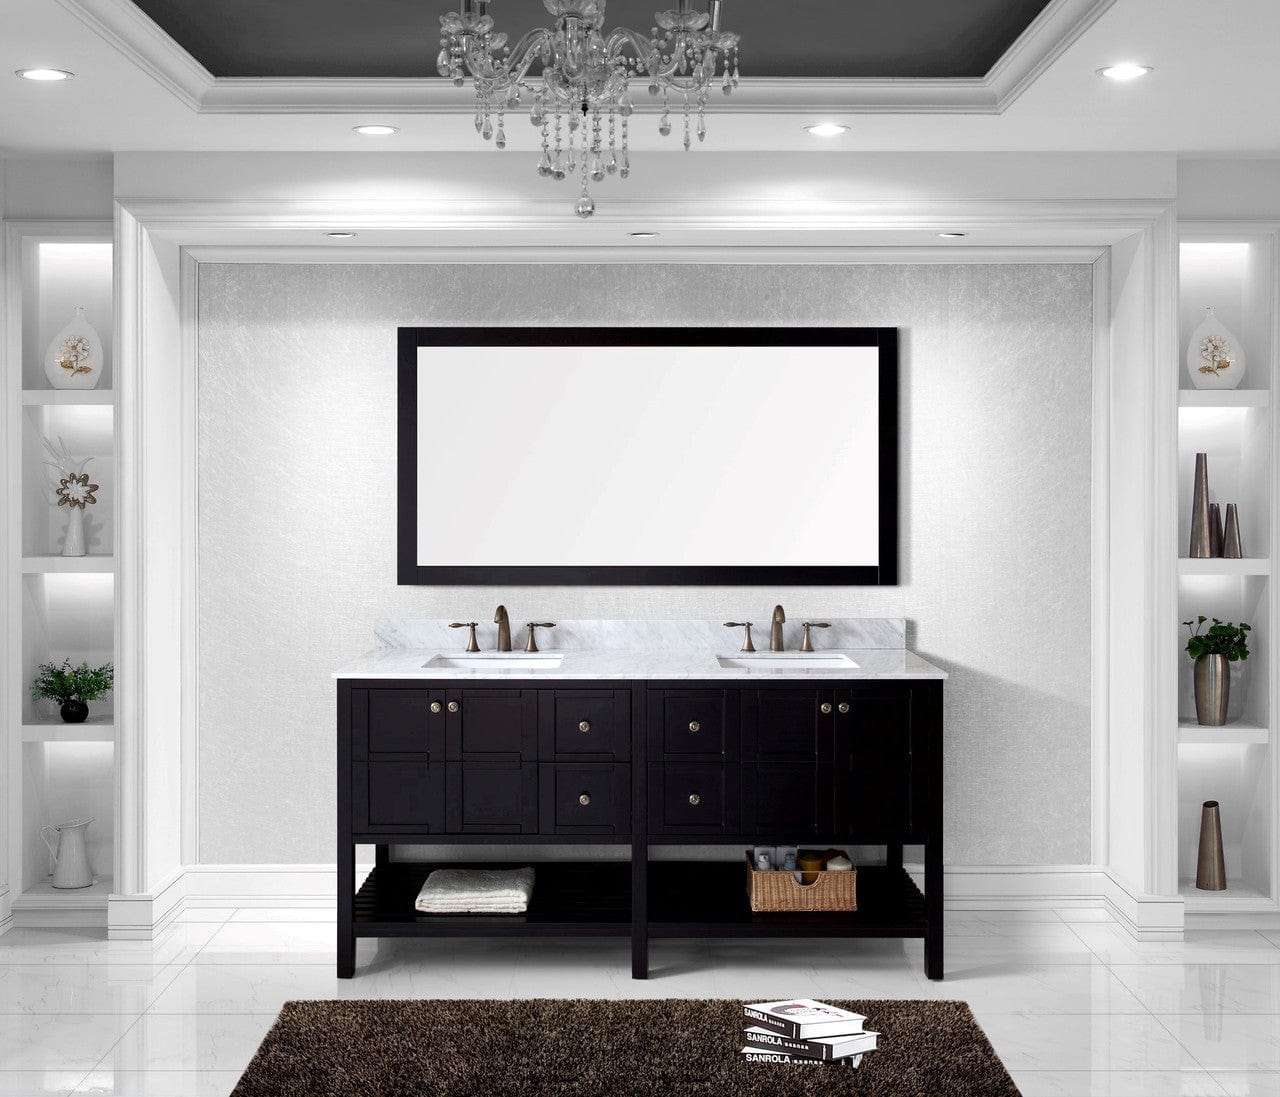 Virtu USA Winterfell 72" Double Bathroom Vanity Cabinet Set in Espresso